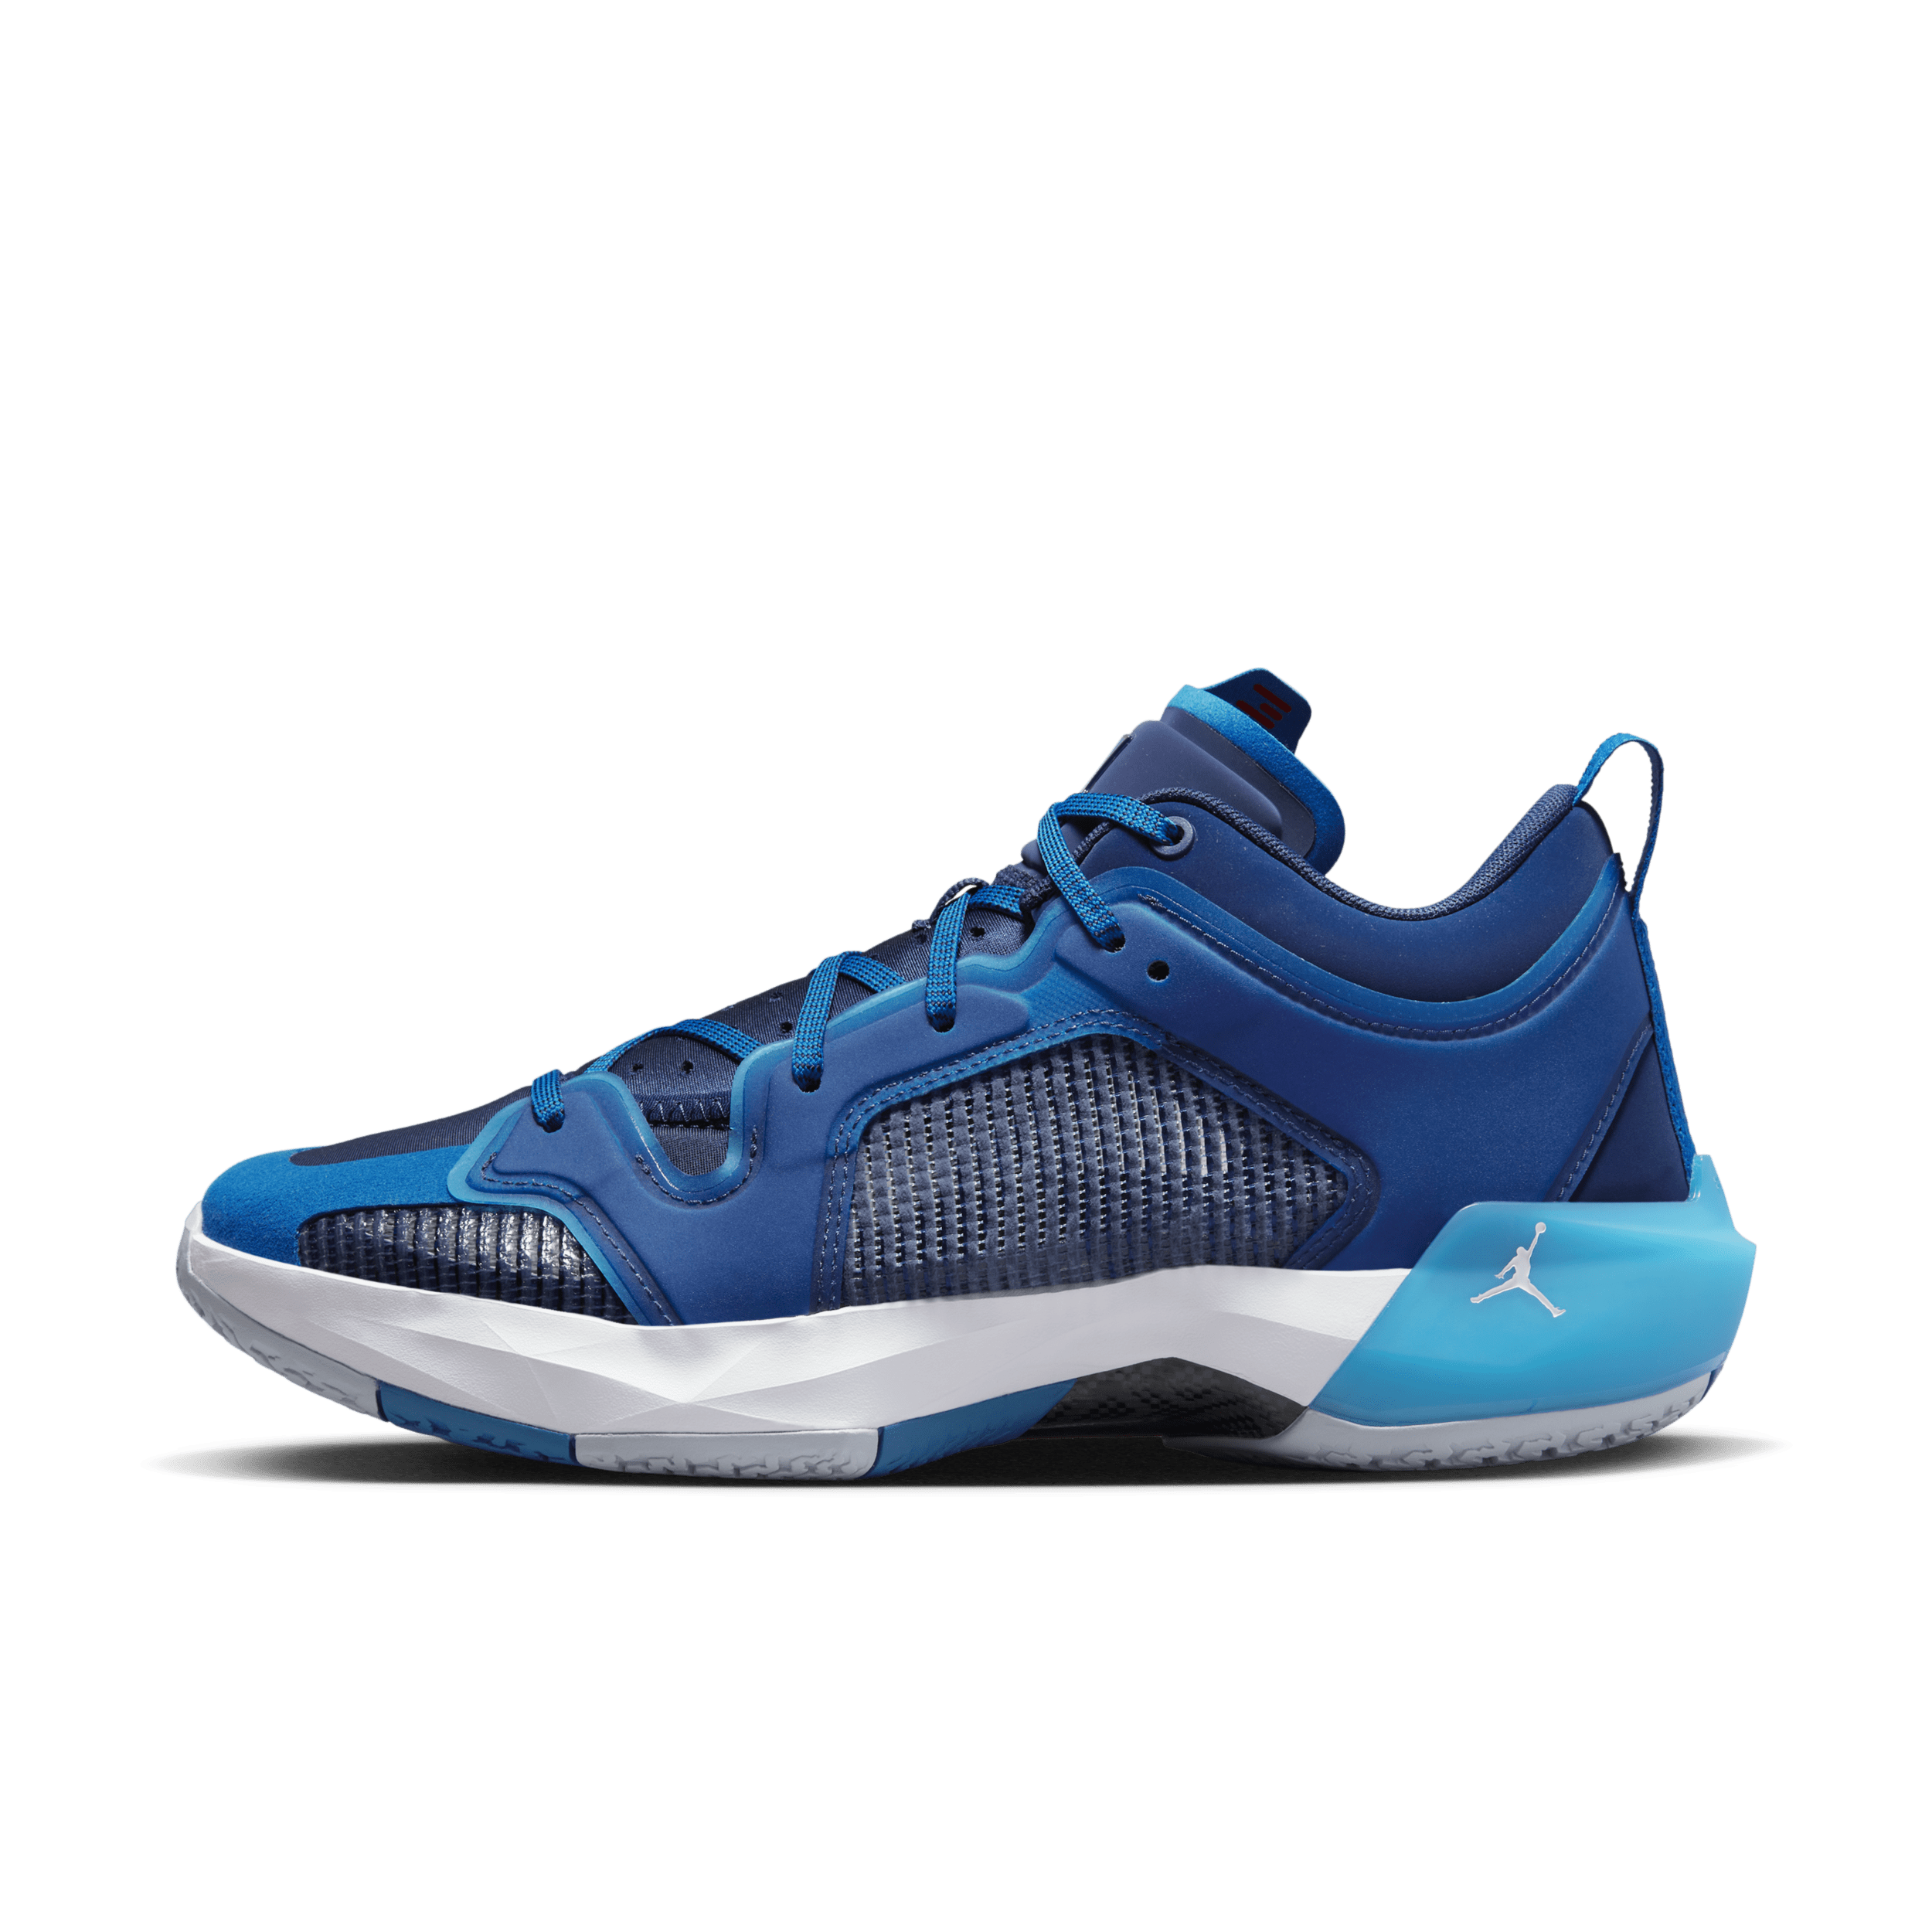 Air Jordan XXXVII Low-basketballsko - blå